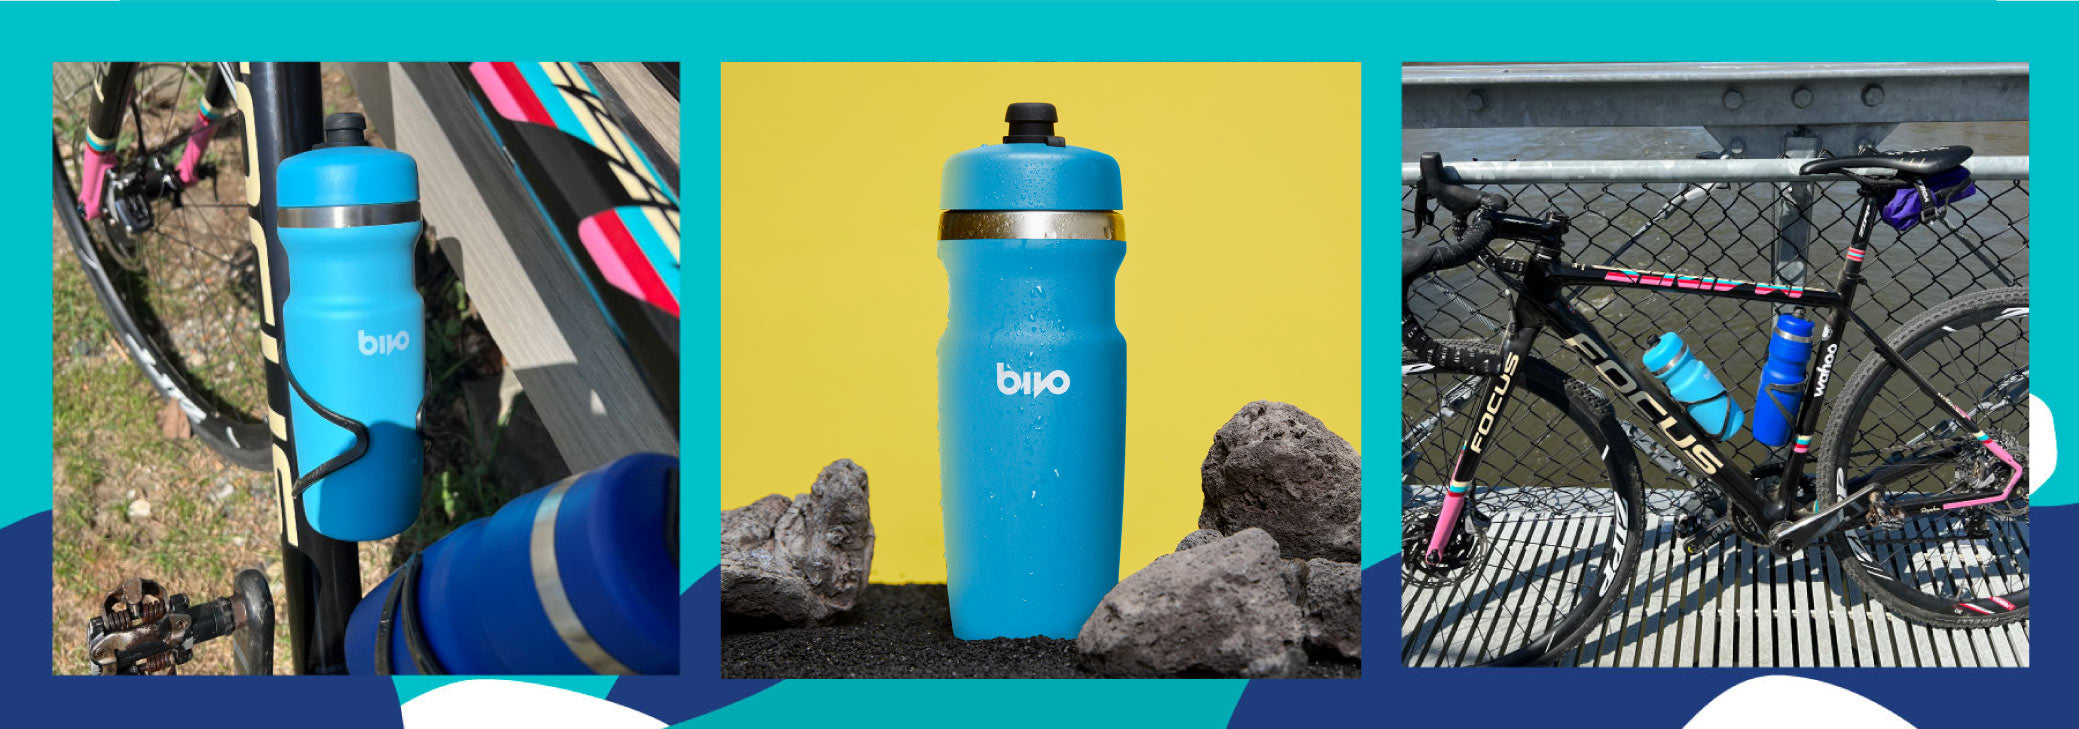 Bivo Bivo Trio Mini Insulated 17oz Stainless Water Bottle